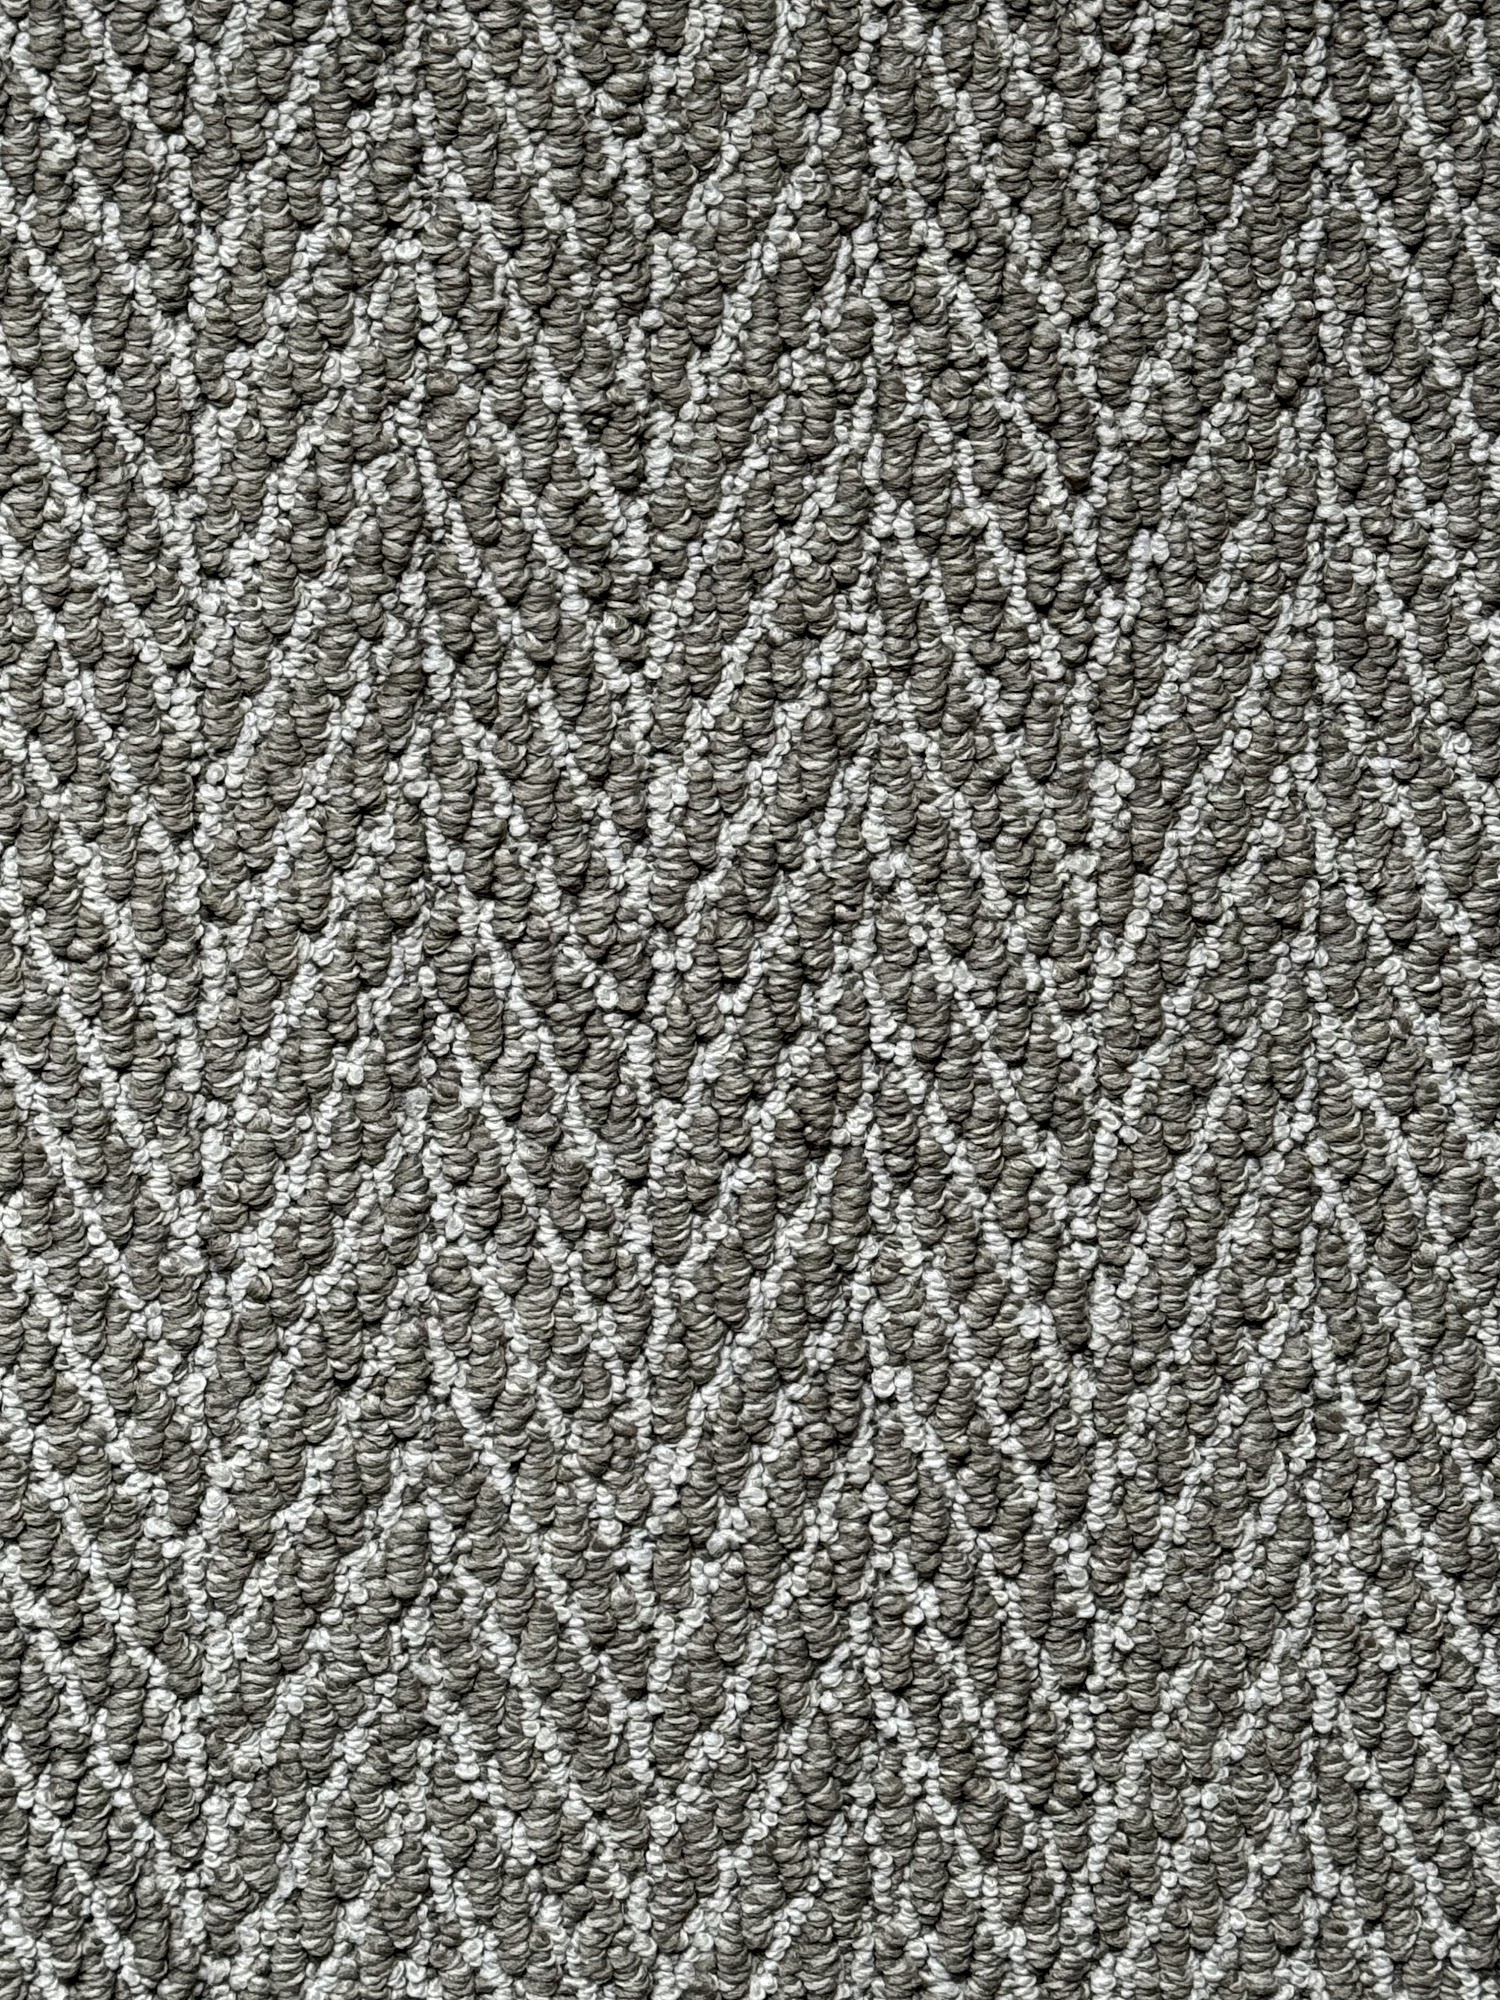 McMillen's Carpet Outlet 11993 PA-66, Clarion Pennsylvania 16214